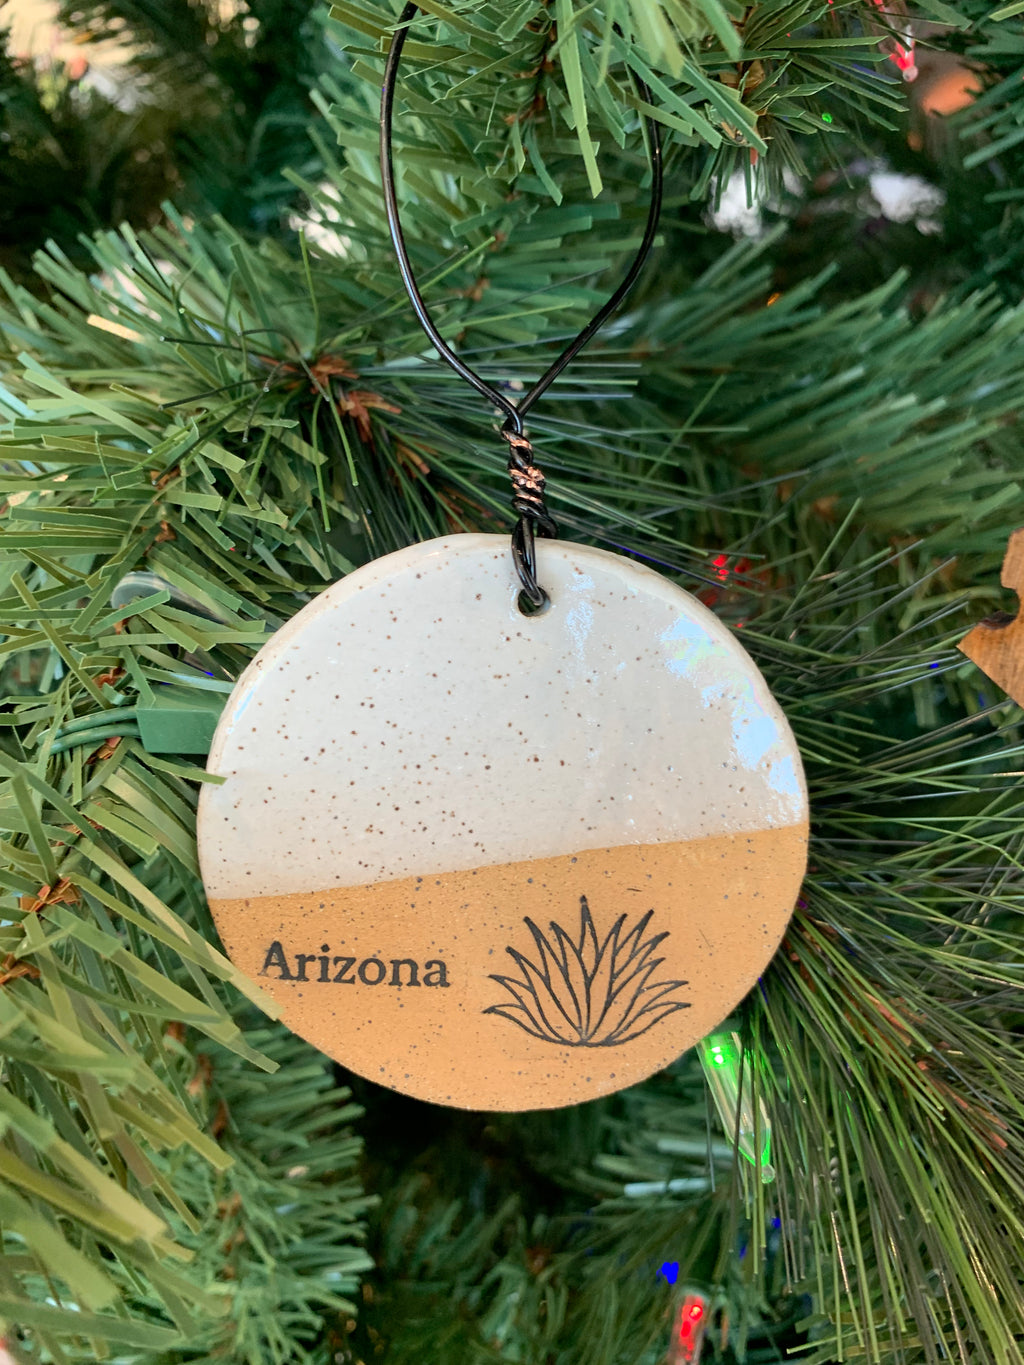 Arizona Agave Ceramic Rustic Ornament